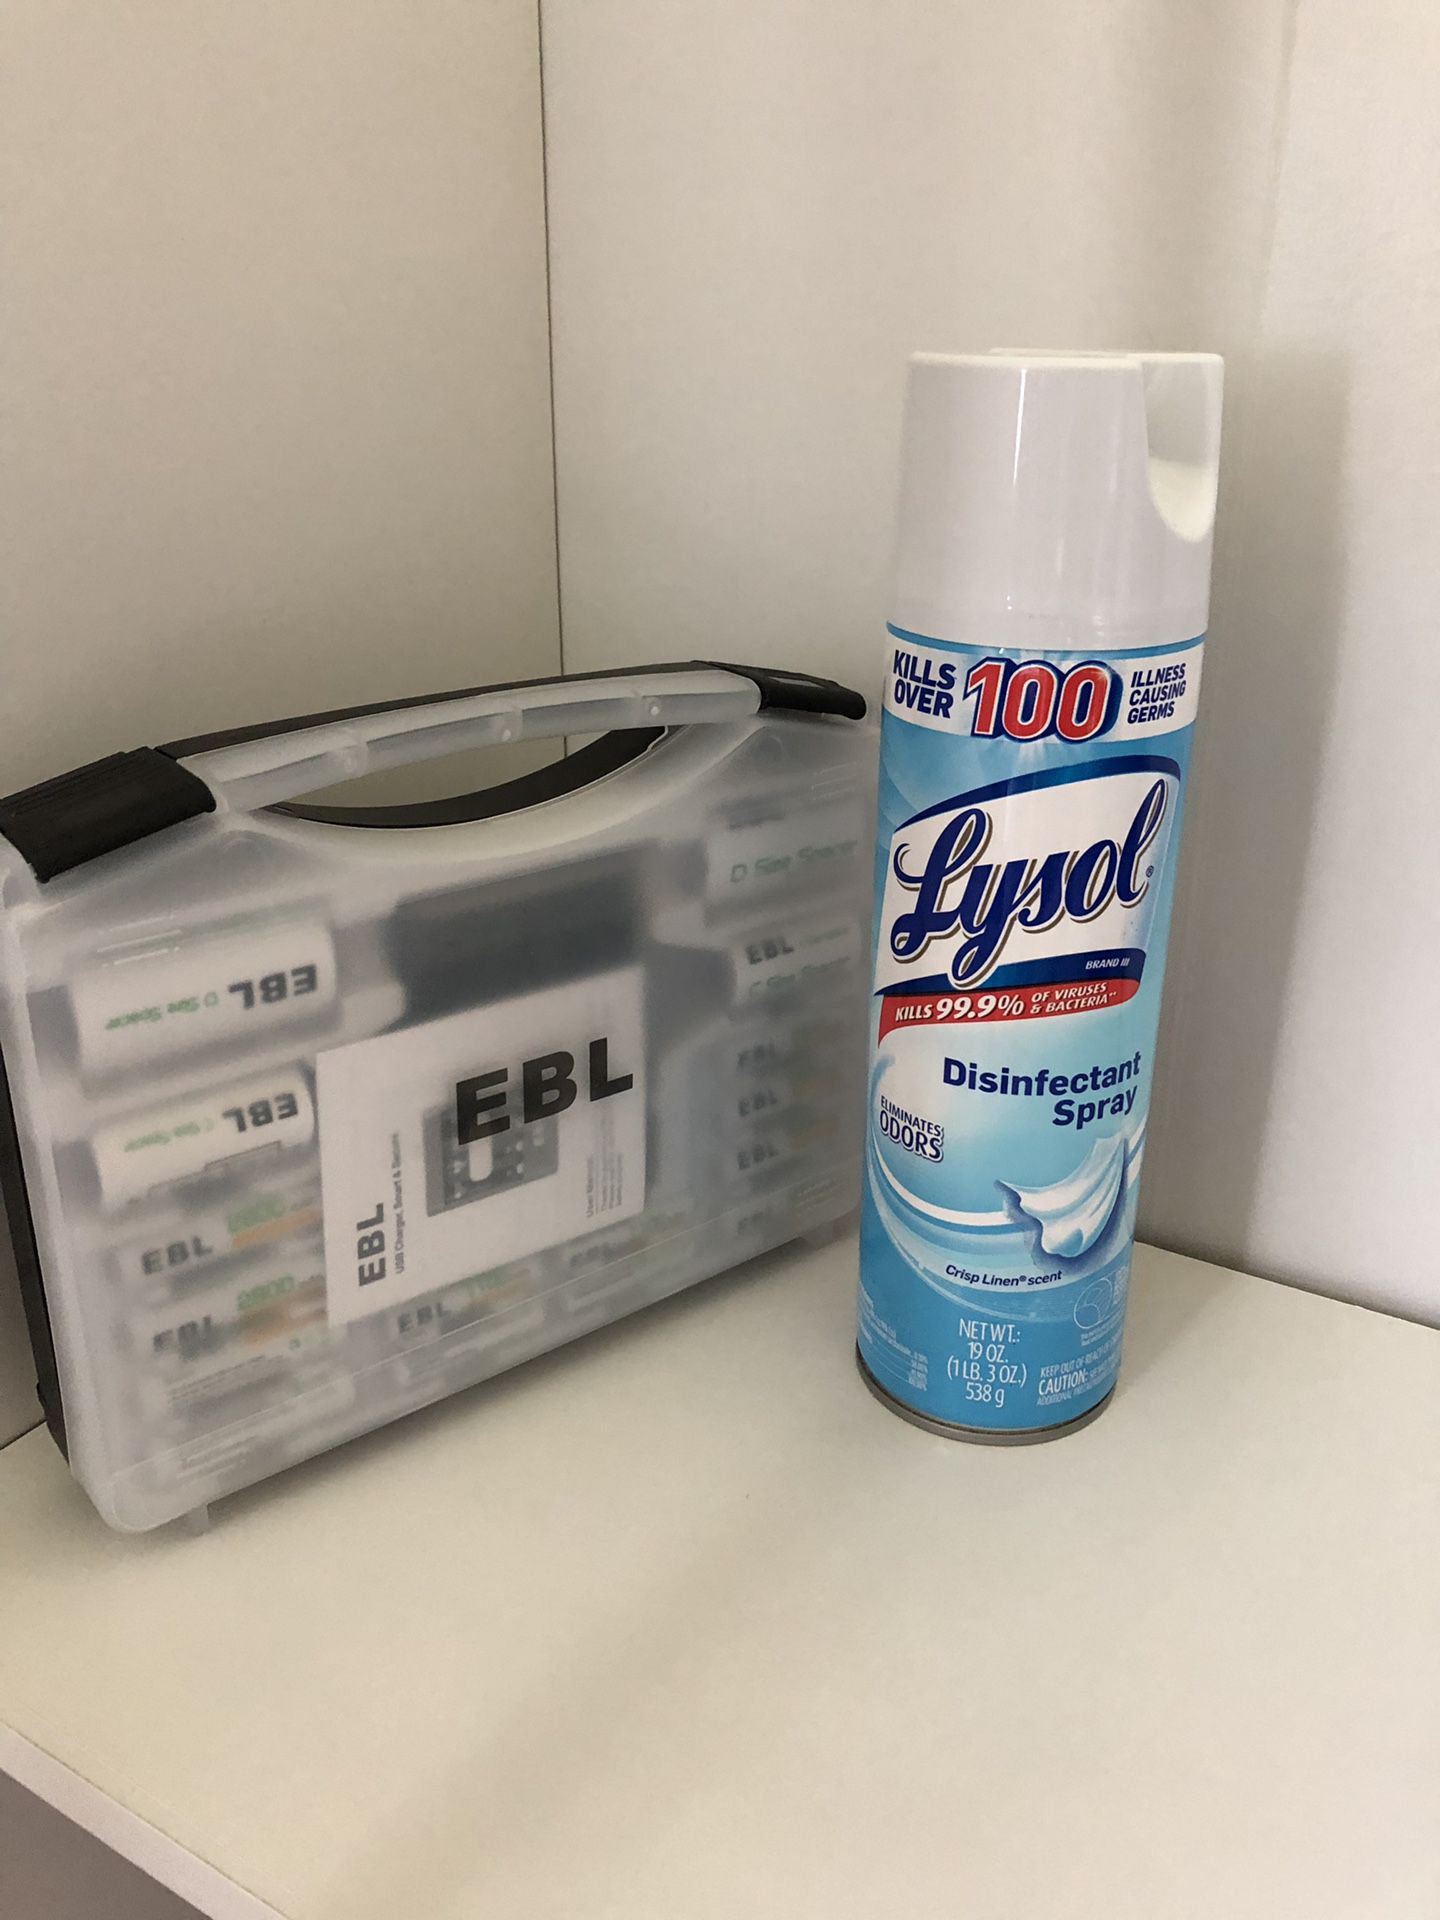 Battery & Storage Case Organizer & Lysol Spray